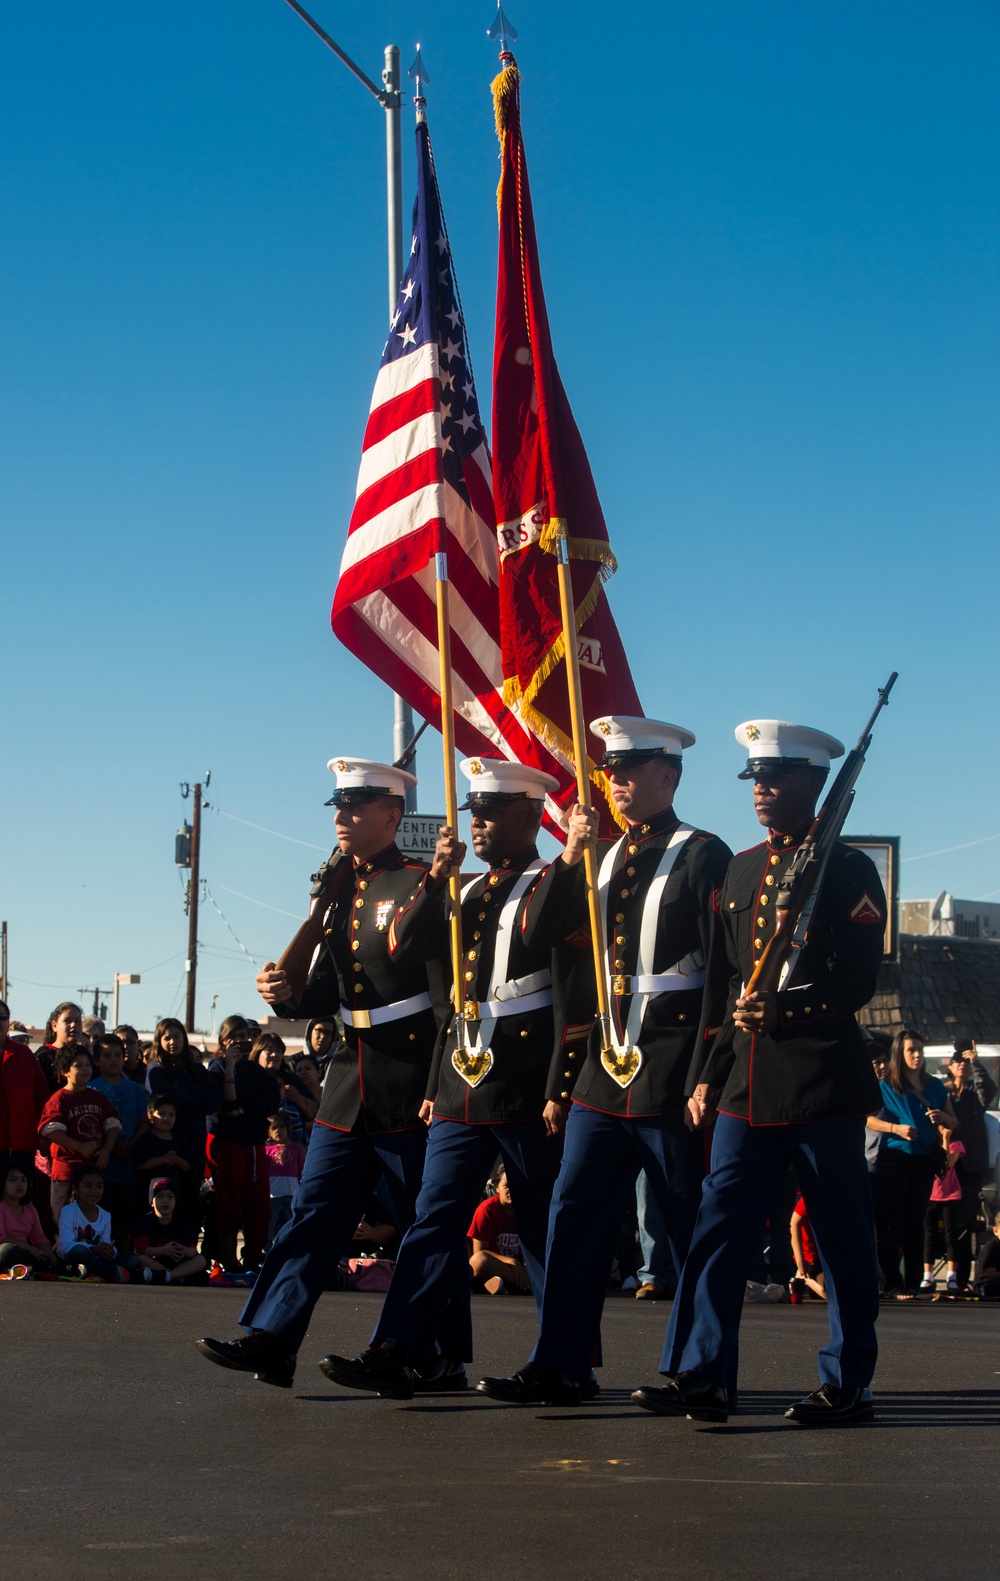 DVIDS Images Yuma Veterans Day parade [Image 1 of 3]